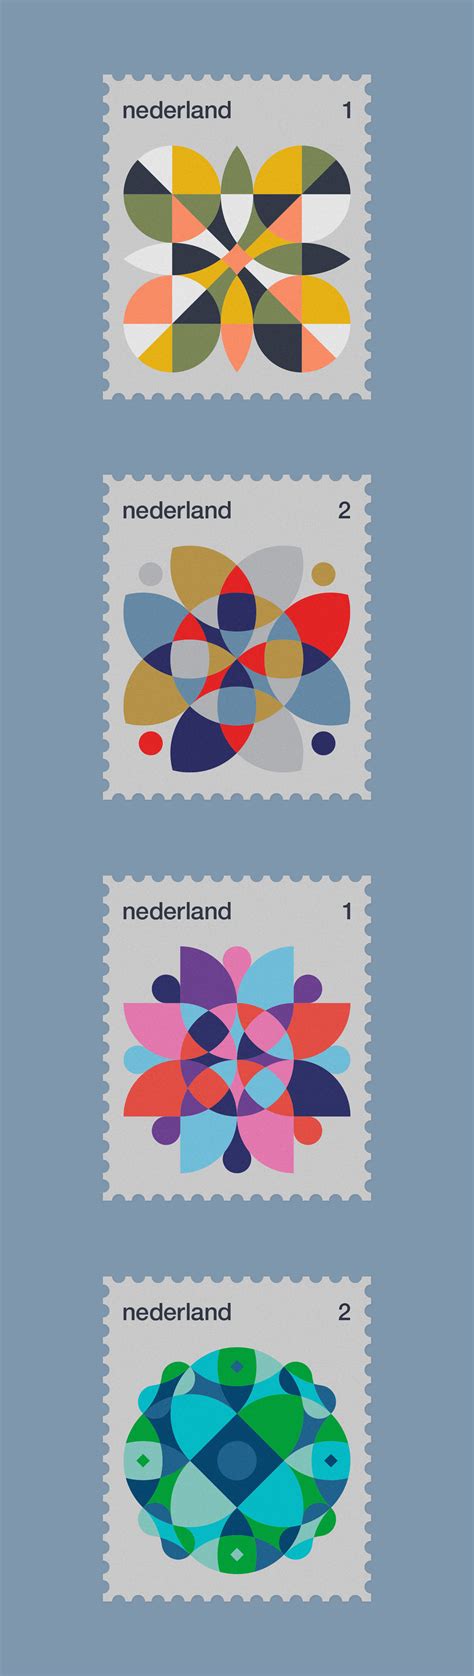 dutch stamps series  rick jordens